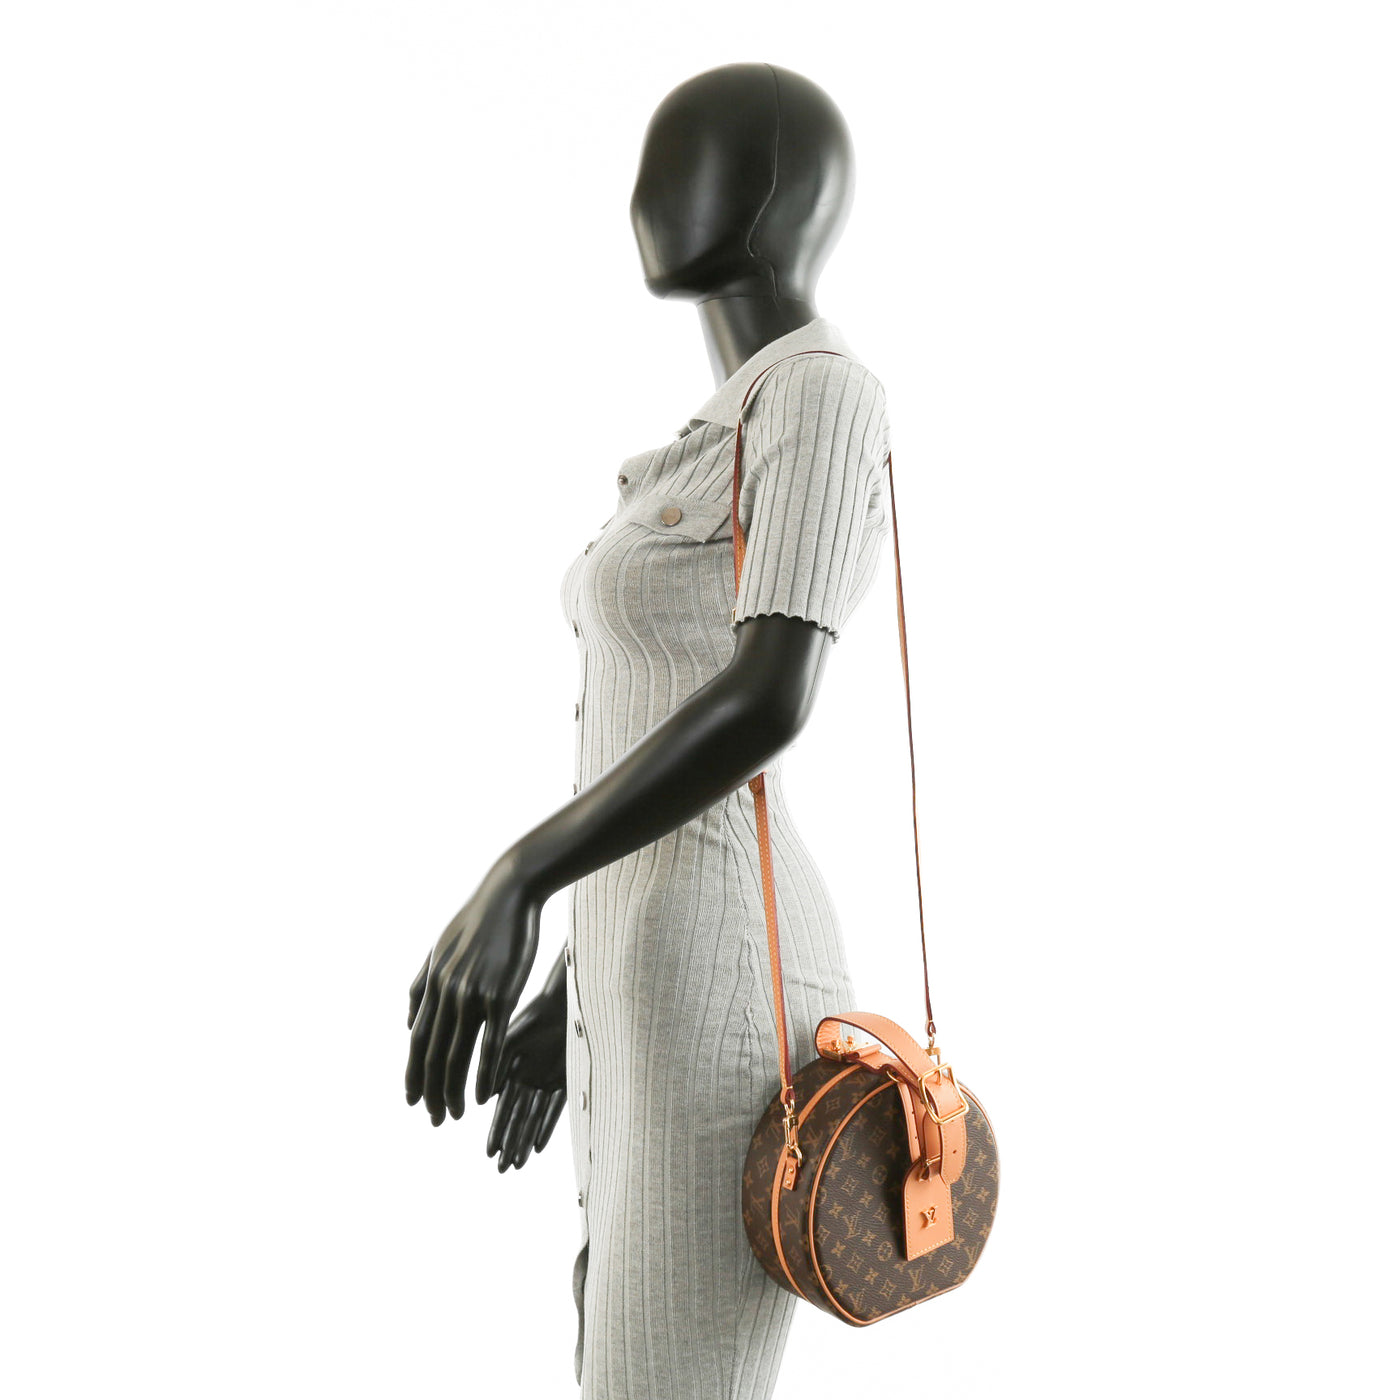 Petite Boite Chapeau Monogram - Women - Handbags